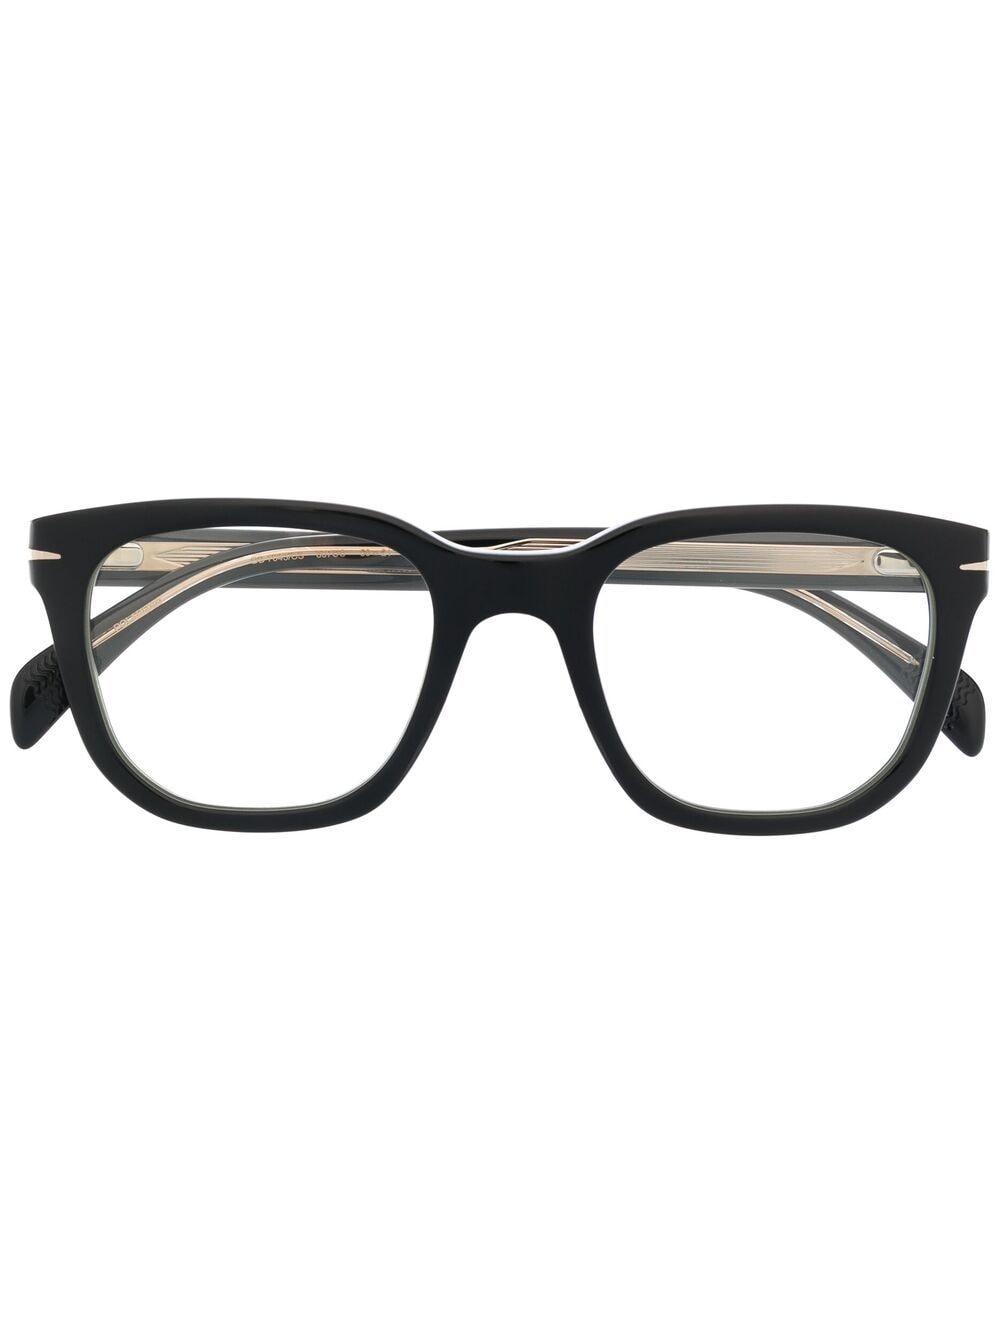 Eyewear By David Beckham Clip-on Lens Glasses In Black